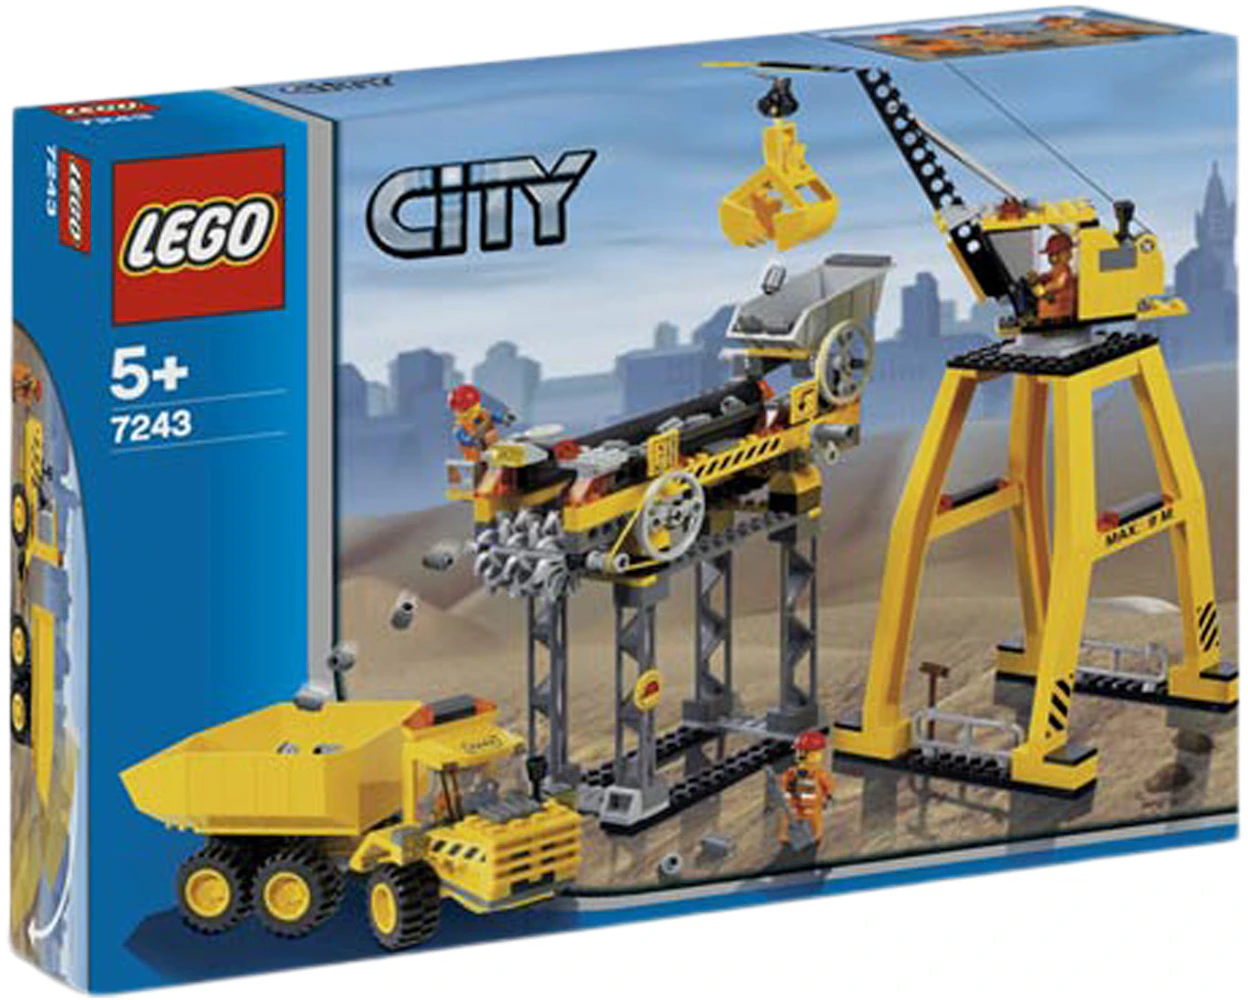 LEGO City Construction Set 7243 -